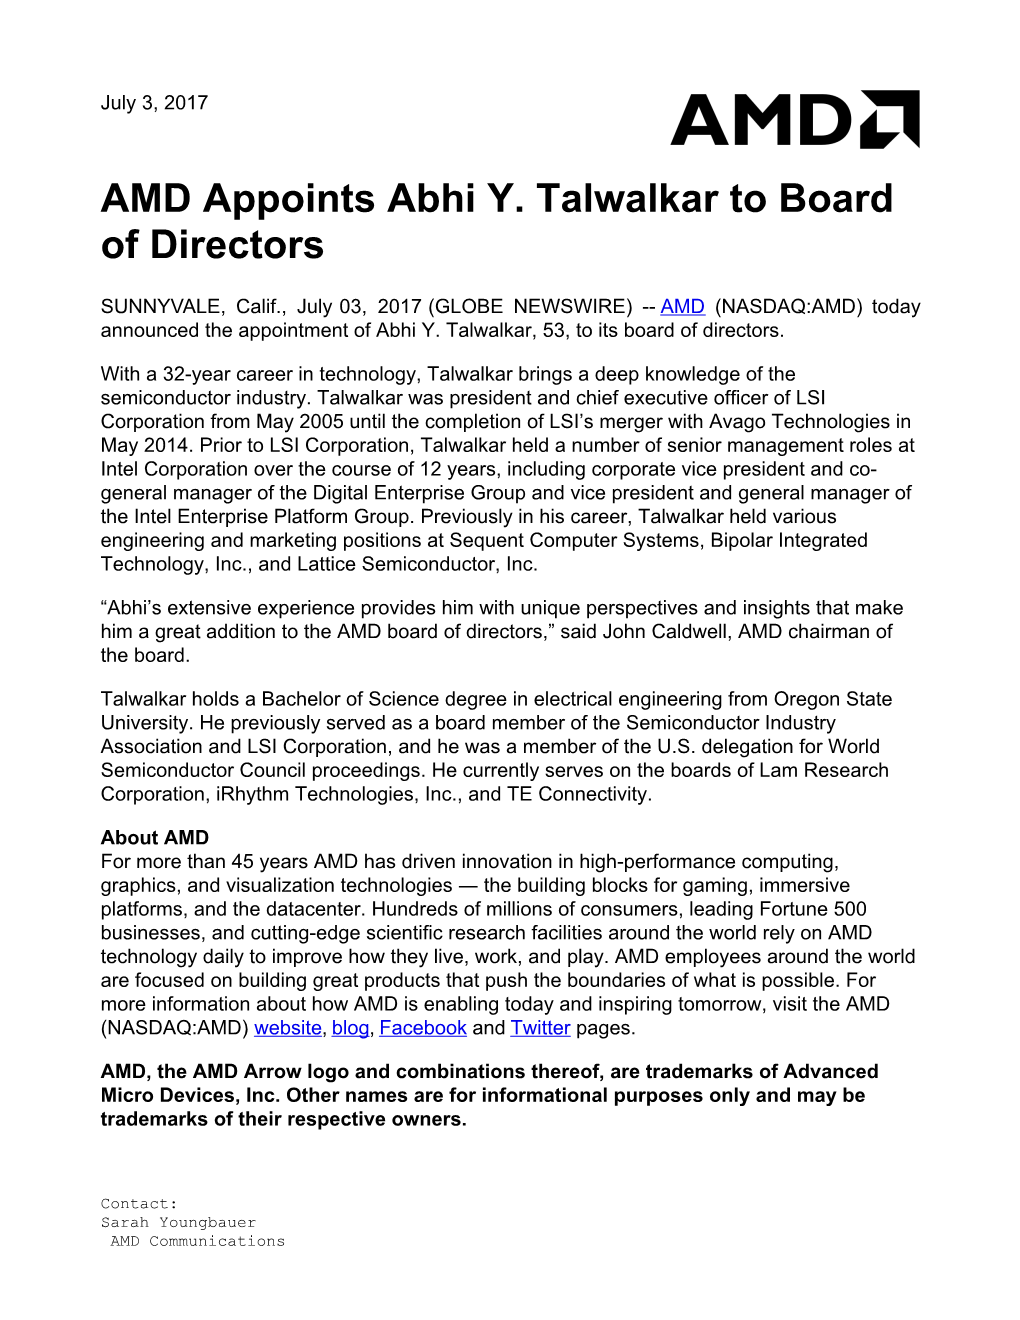 AMD Appoints Abhi Y. Talwalkar to Board of Directors